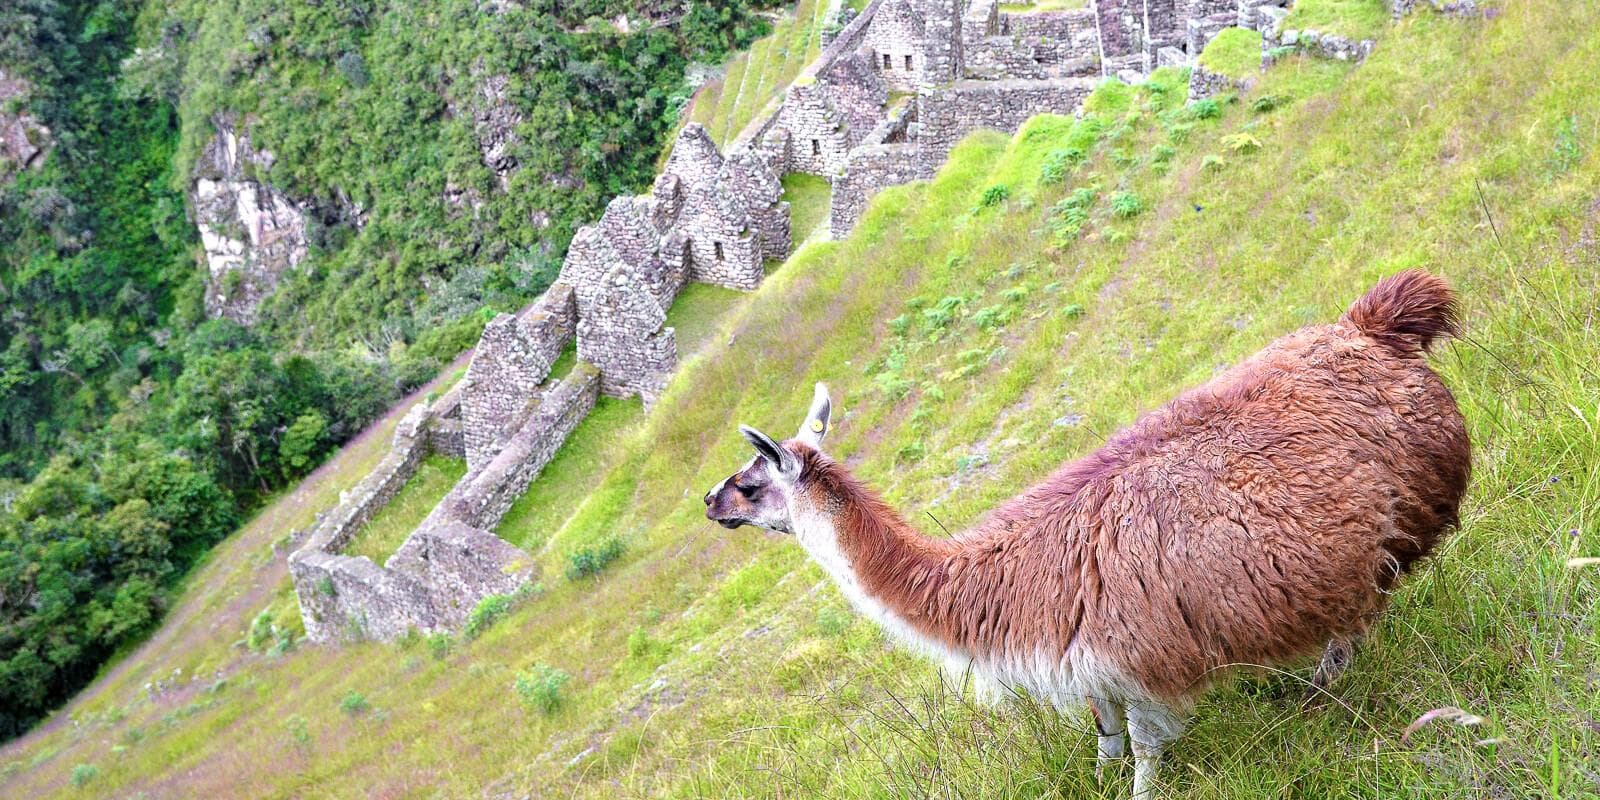 Inca Trail Express to Machu Picchu - Llamas over the ruins